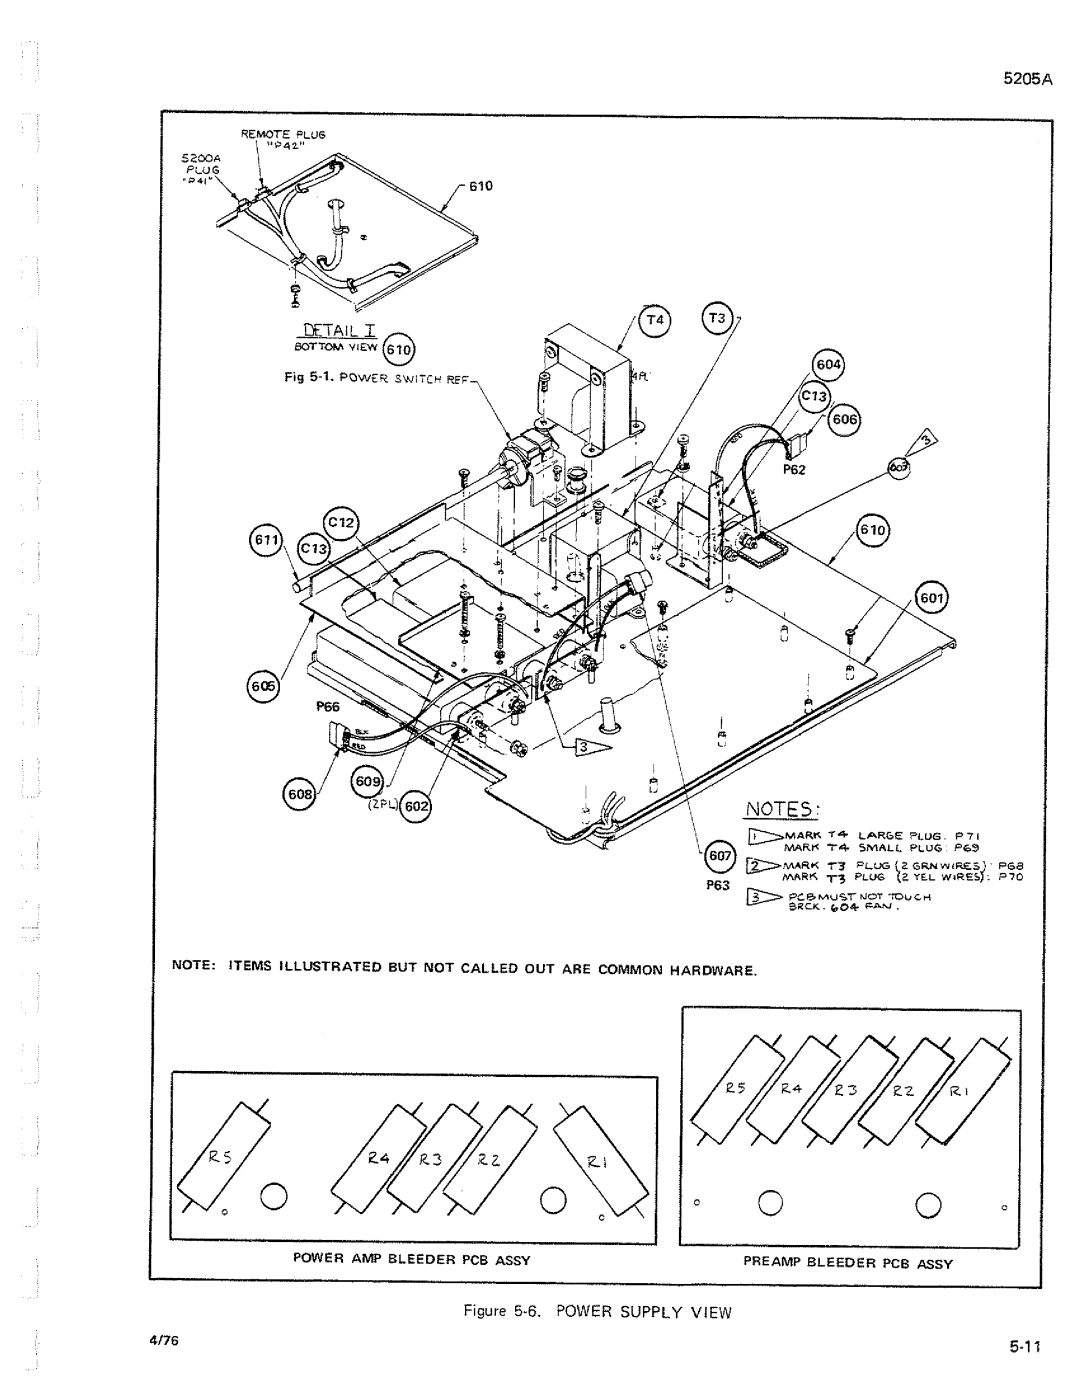 Fluke 5205A manual 